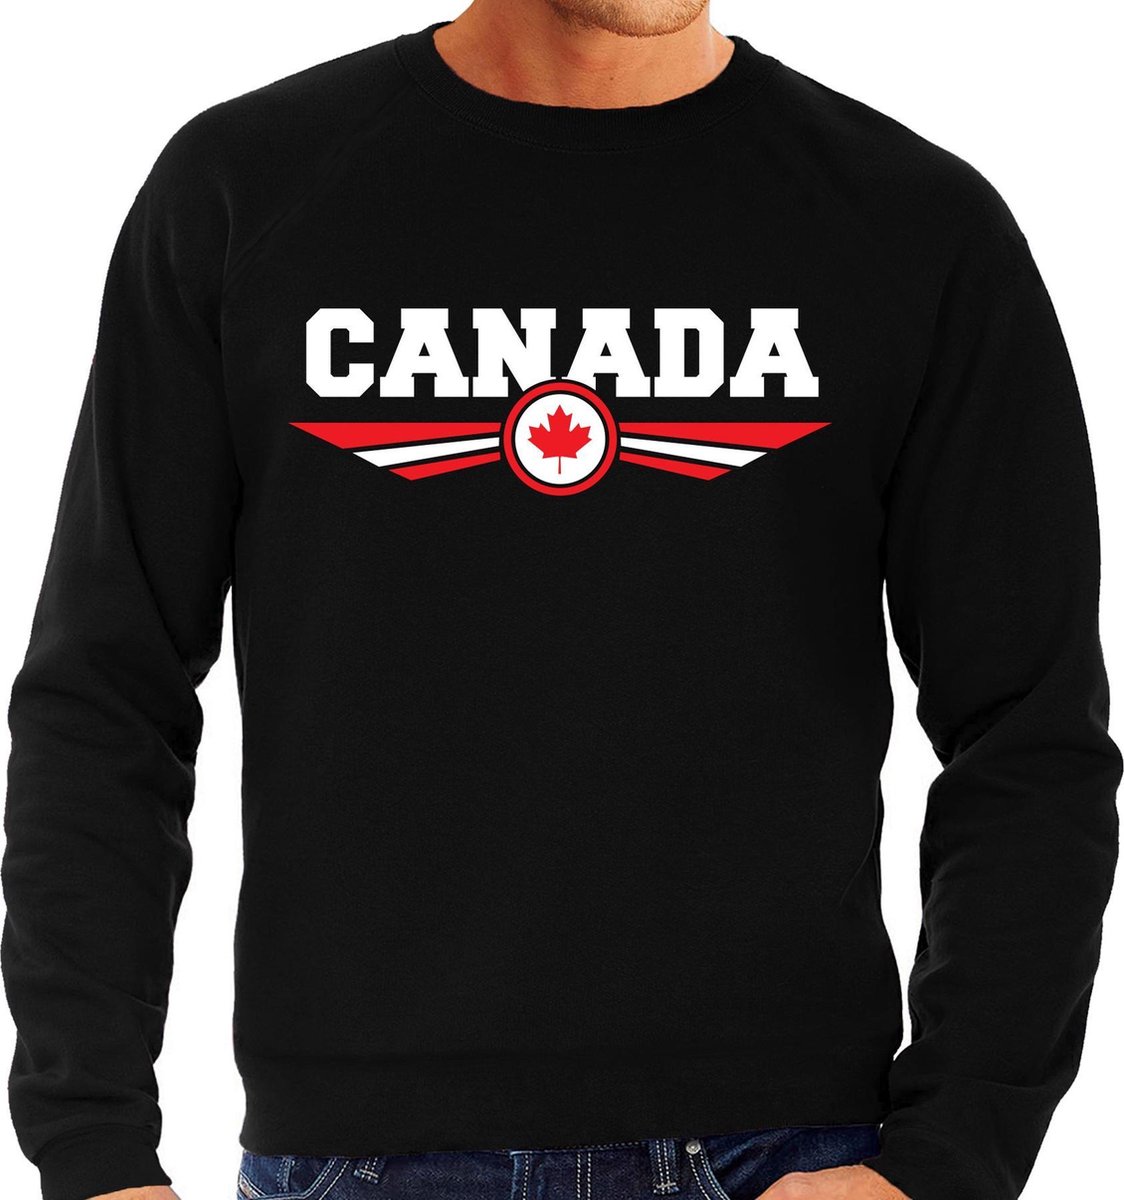 Canada landen sweater / trui zwart heren 2XL